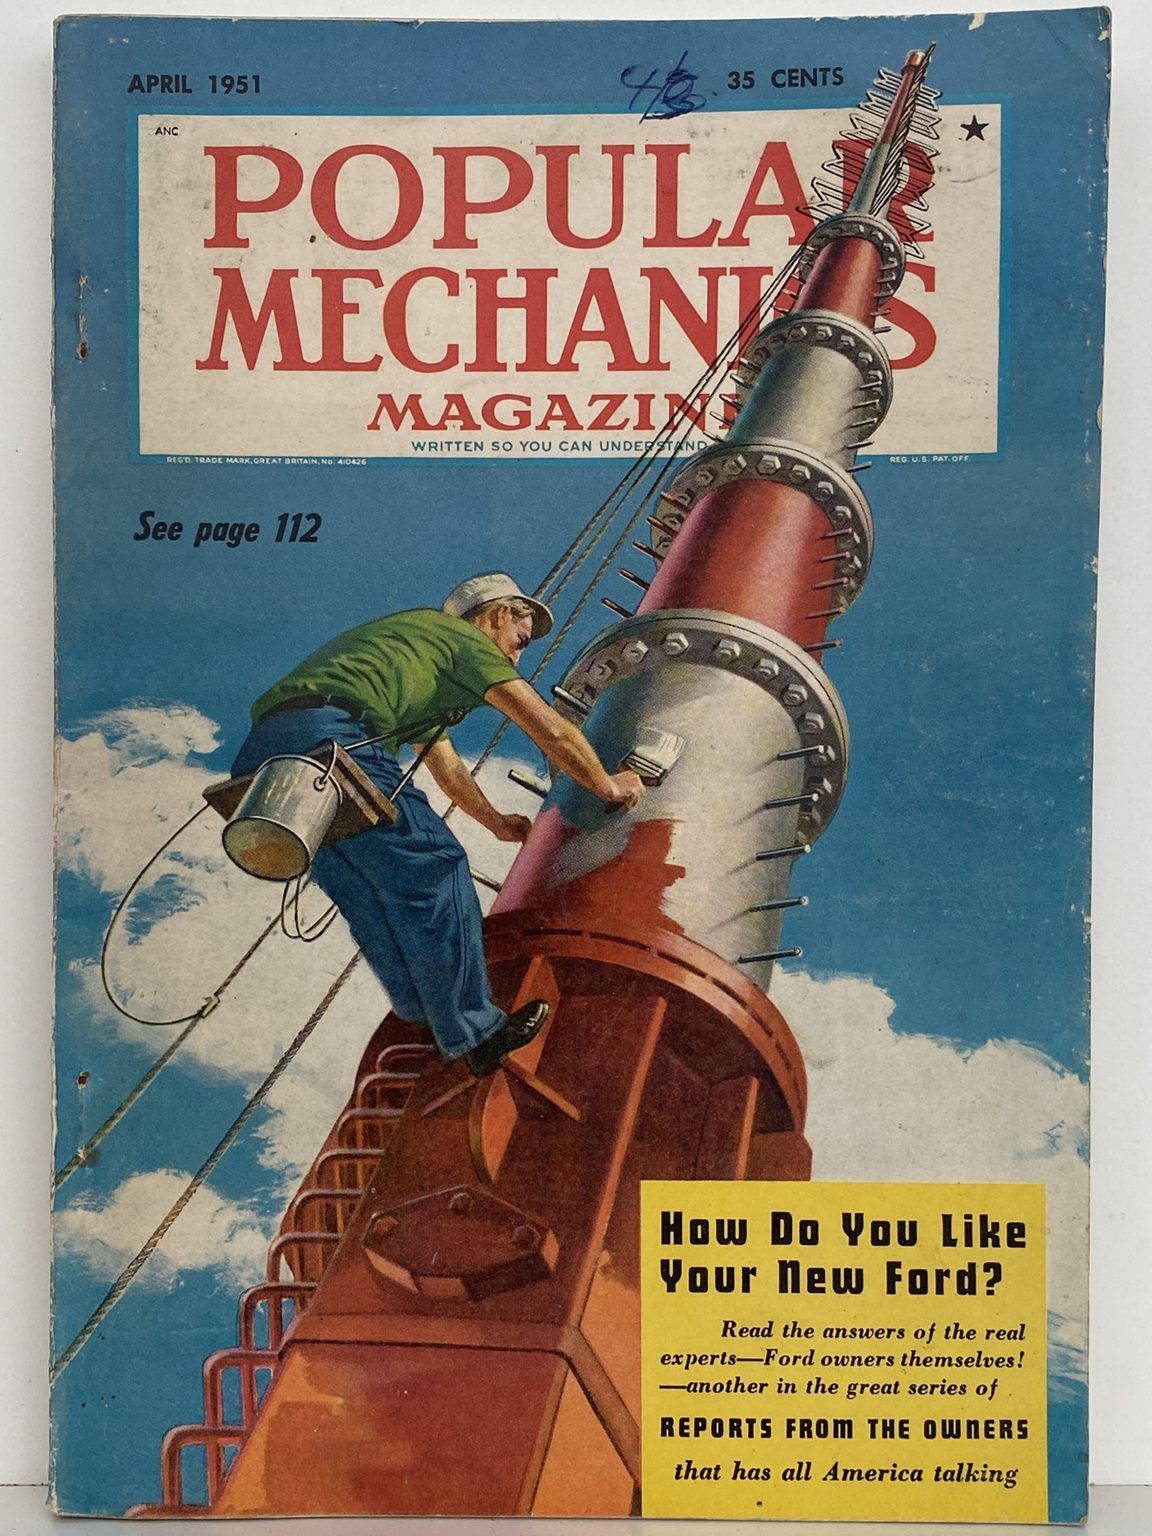 VINTAGE MAGAZINE: Popular Mechanics - Vol. 95, No. 4 - April 1951